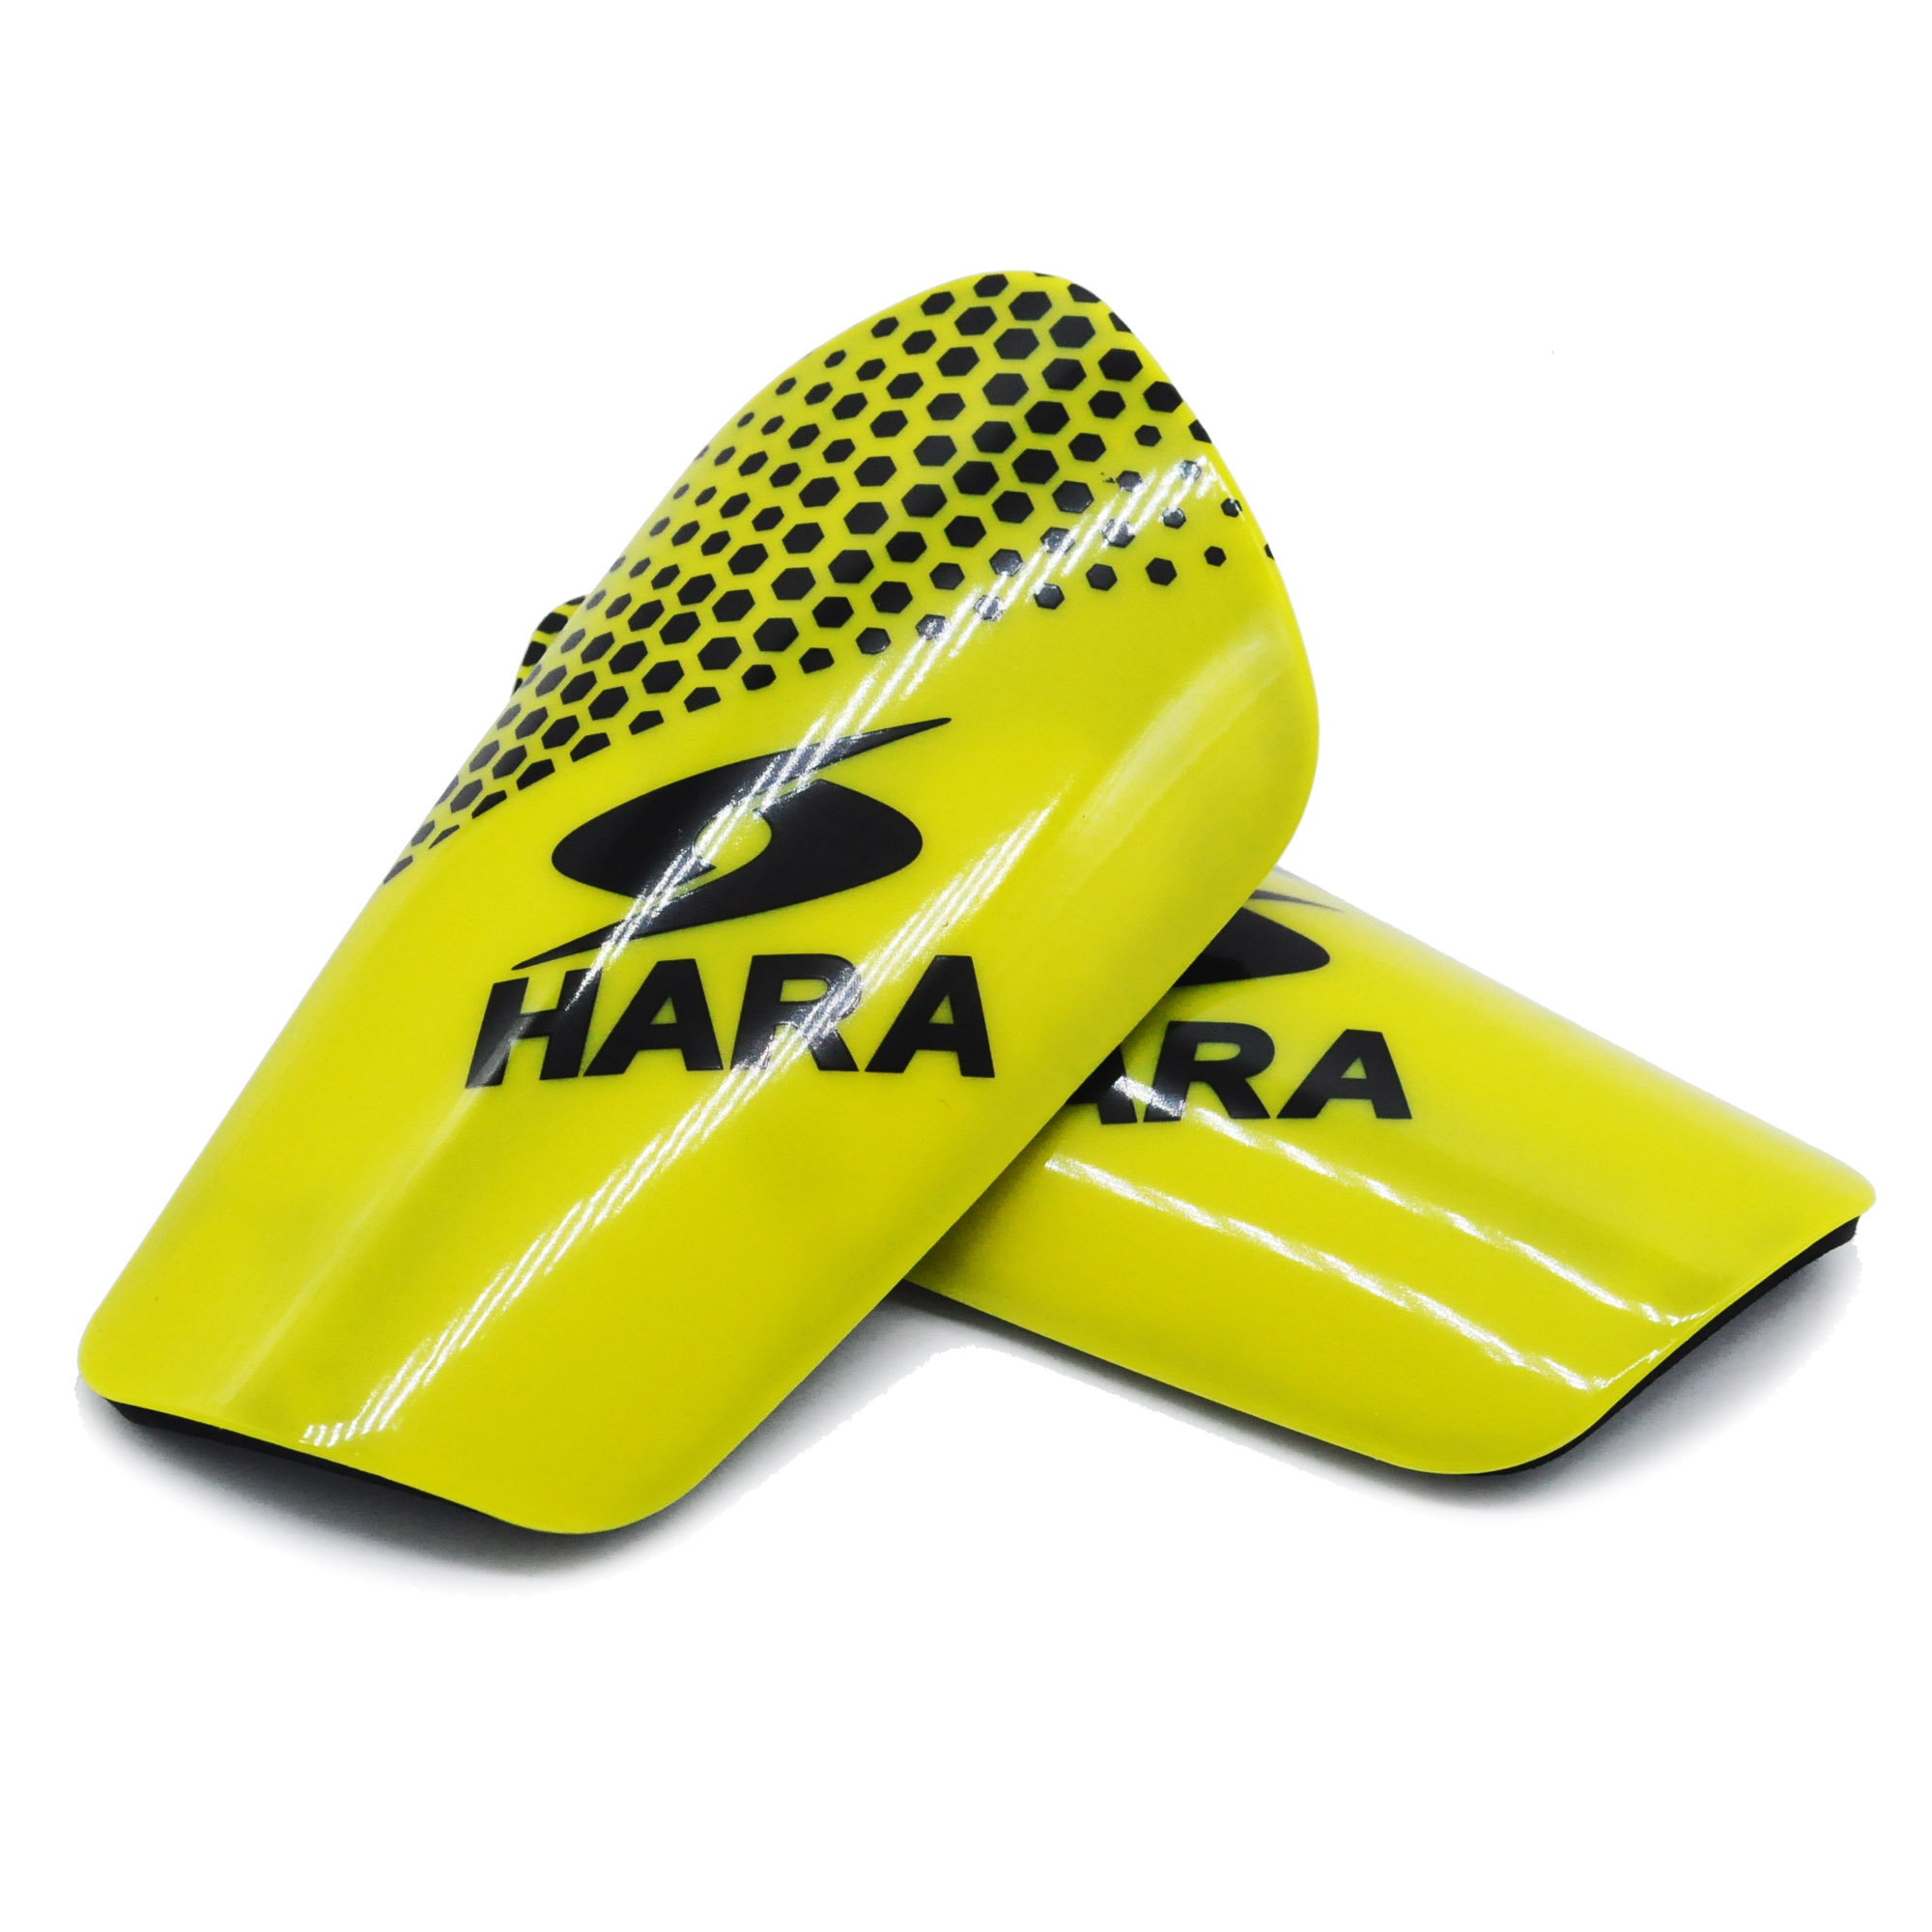 HARA Sports สนับแข้งฟุตบอล สำหรับเด็กและผู้ใหญ่ สีเหลือง